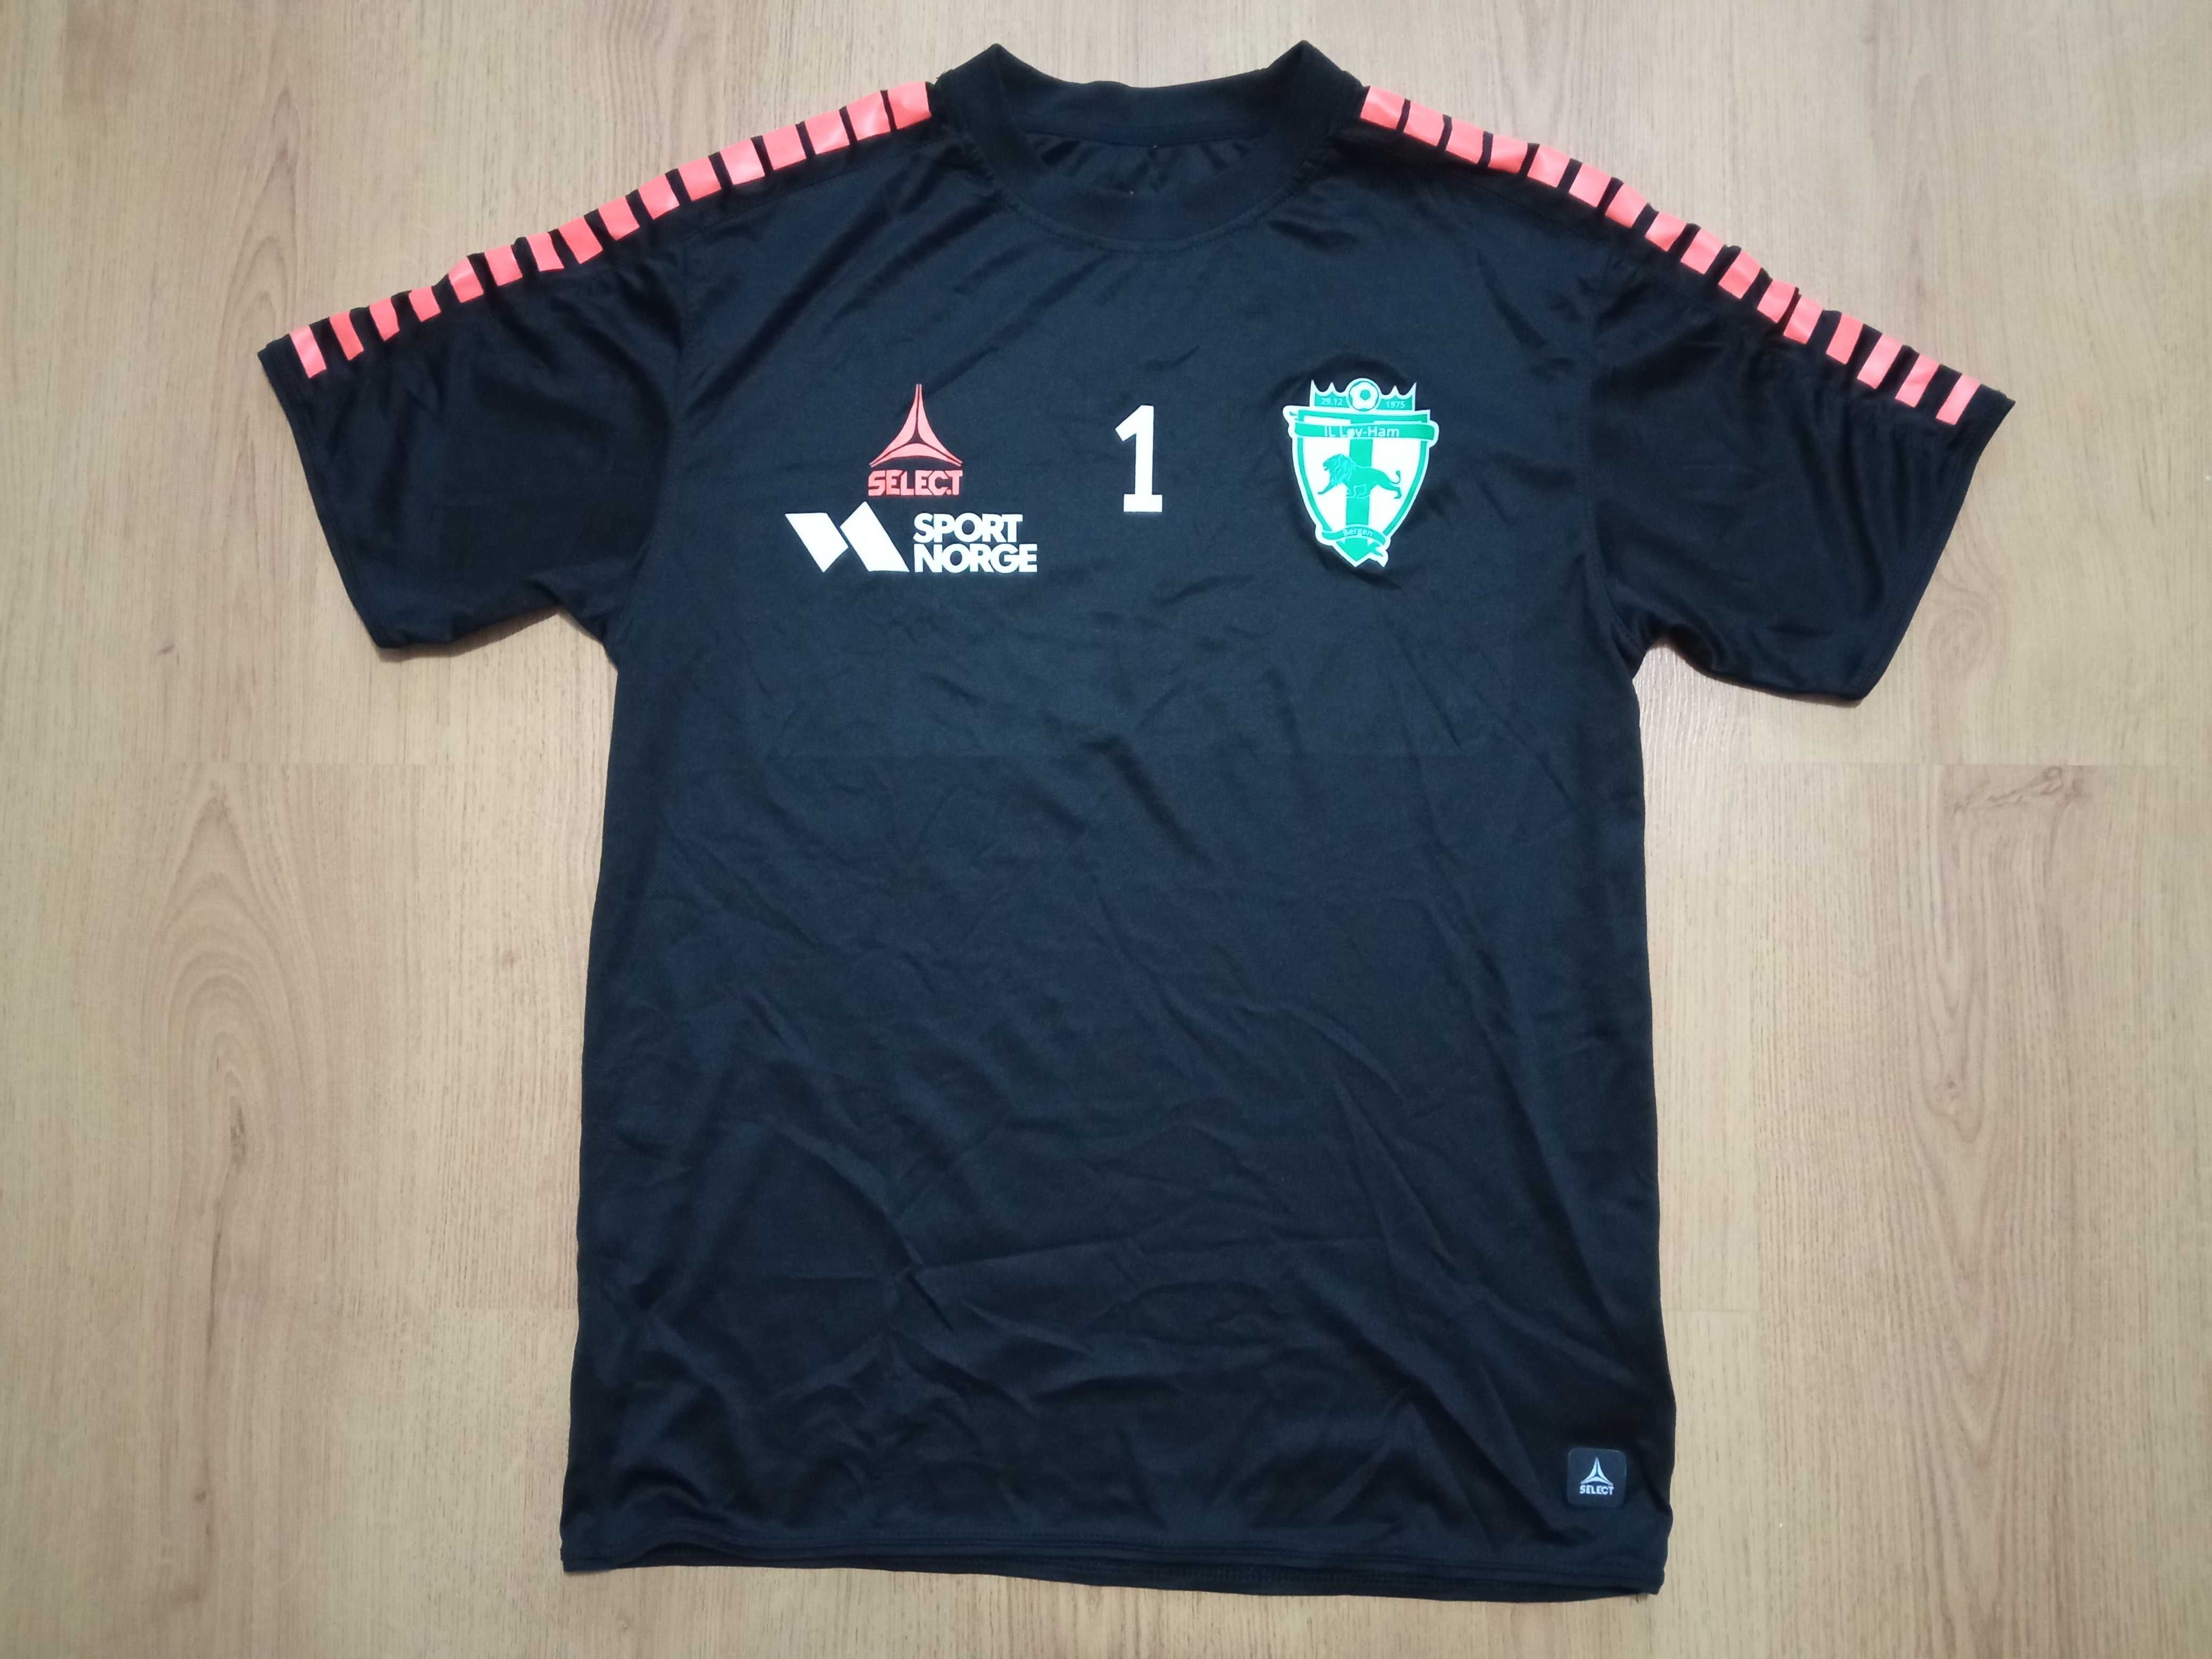 Select IL Lov-Ham Bergen koszulka piłkarska z Norwegii - S